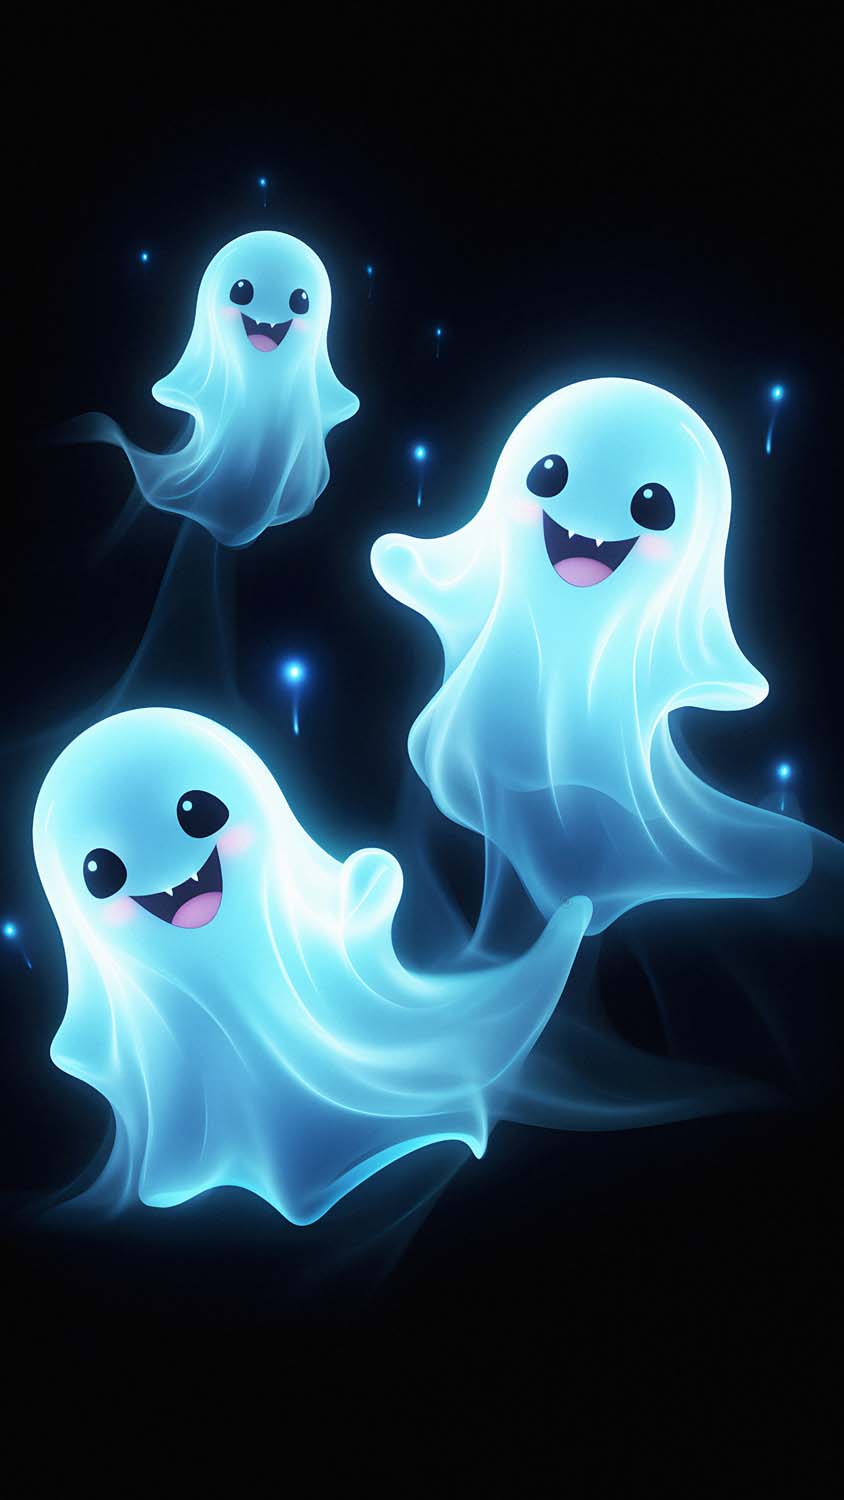 Cute Ghosts Halloween iPhone Wallpaper 4K